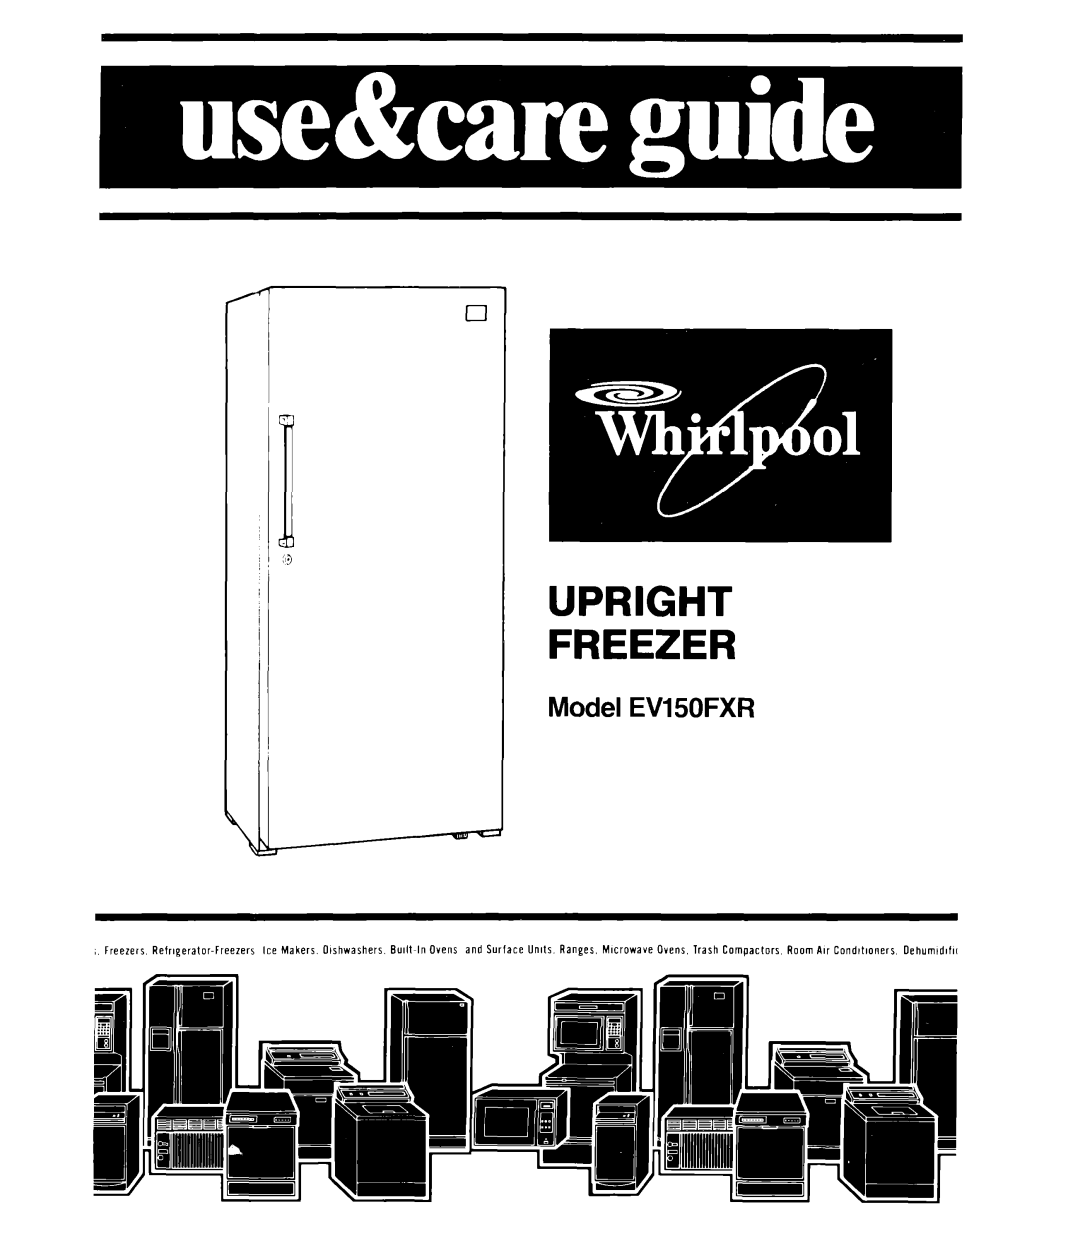 Whirlpool EV150FXR manual Upright Freezer, Model EVISOFXR 